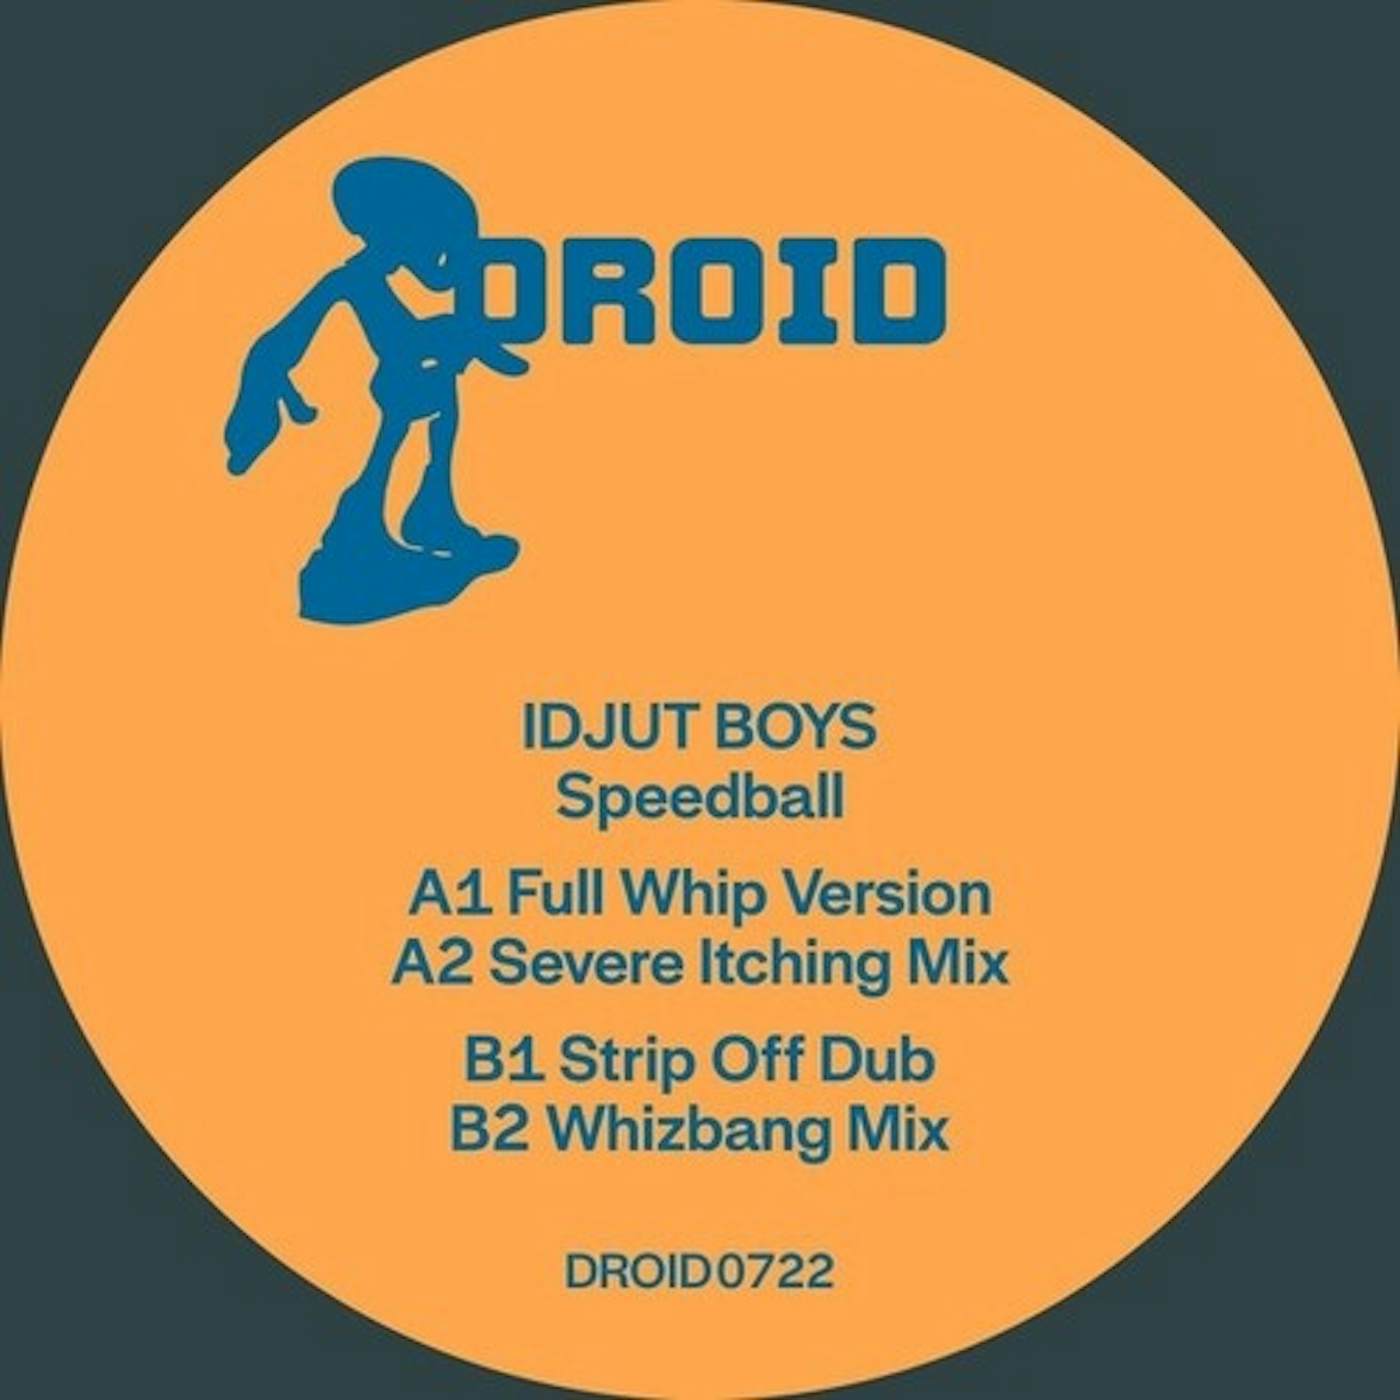 Idjut Boys Speedball Vinyl Record